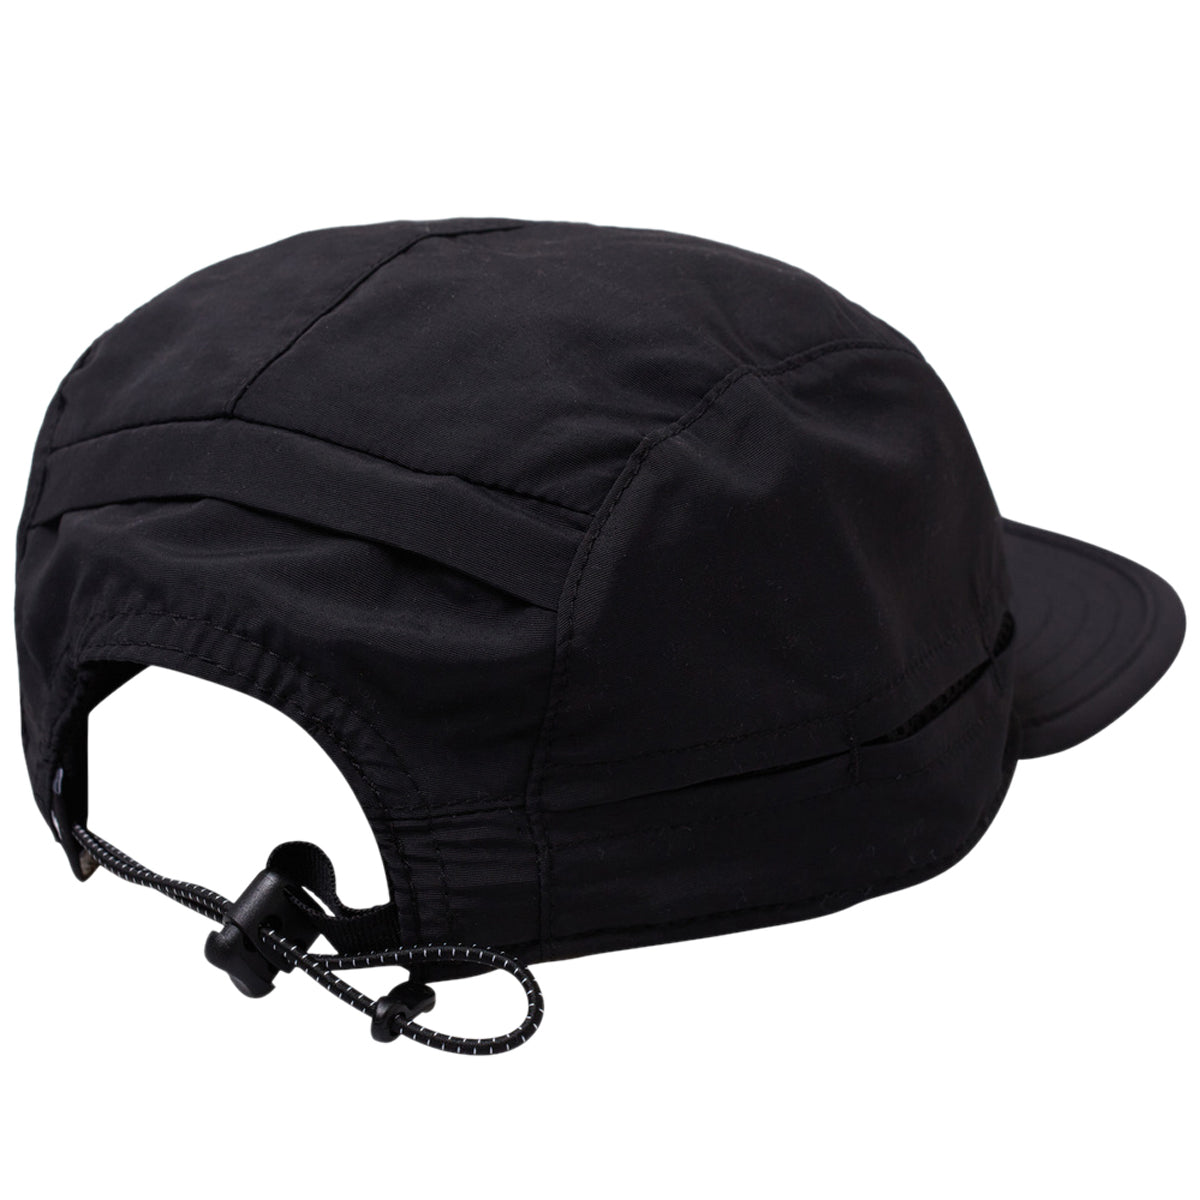 RVCA Outsider Hat - Black image 2